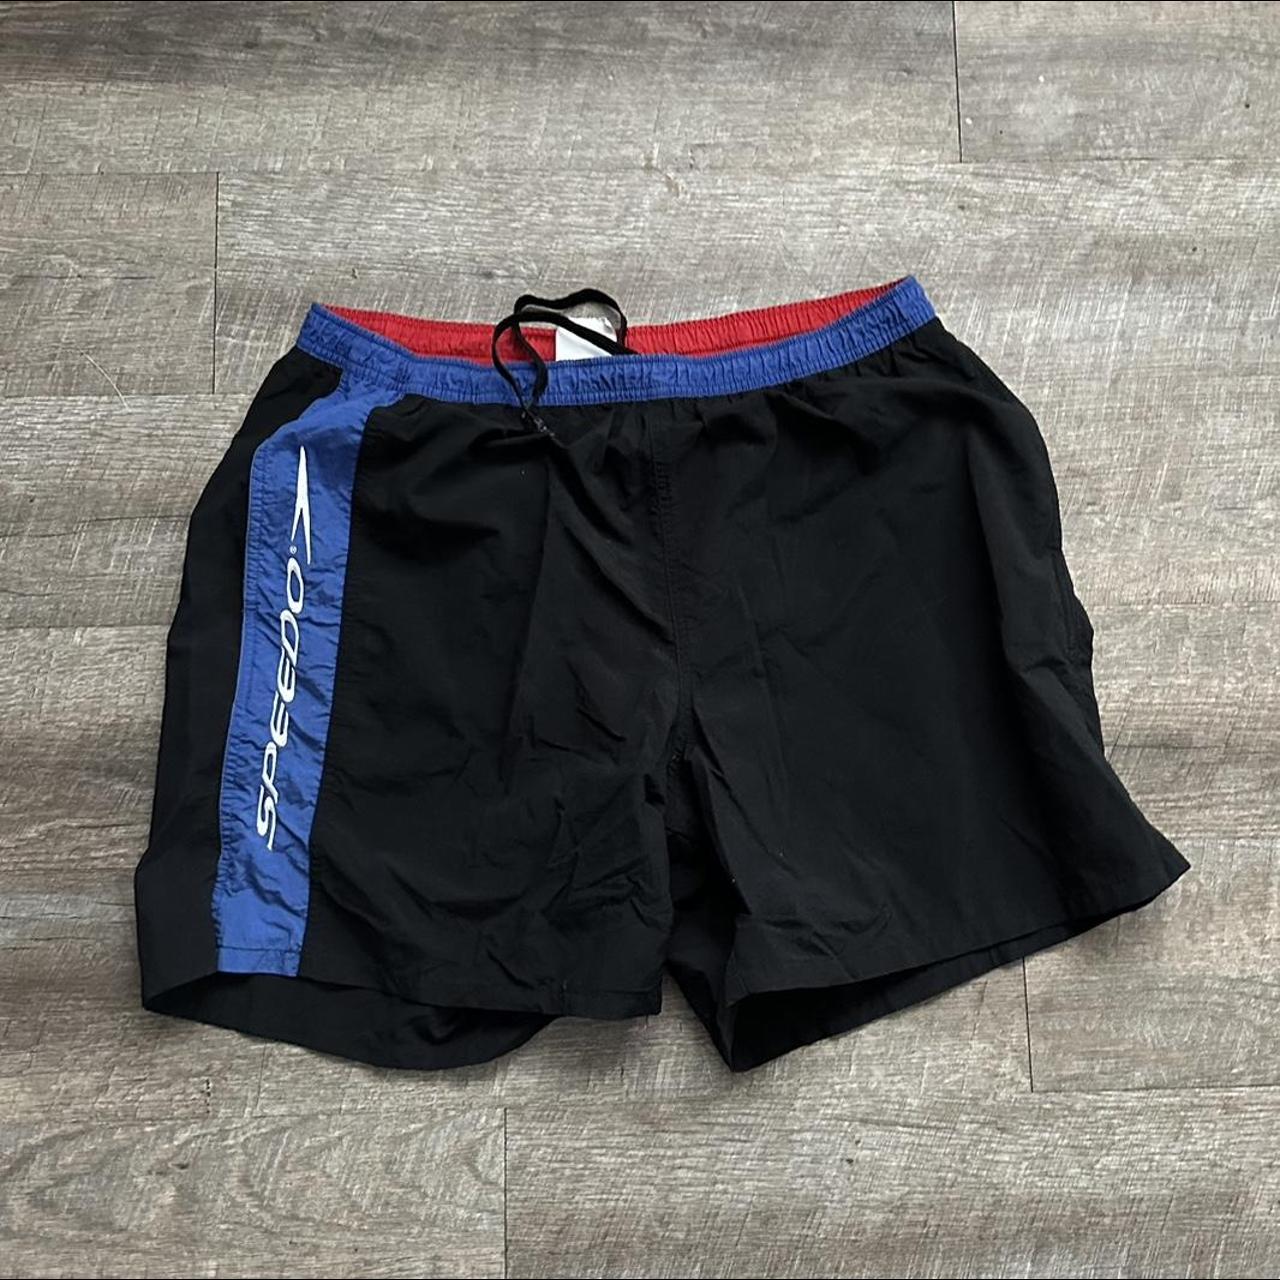 Speedo Men's Blue and Red Shorts | Depop